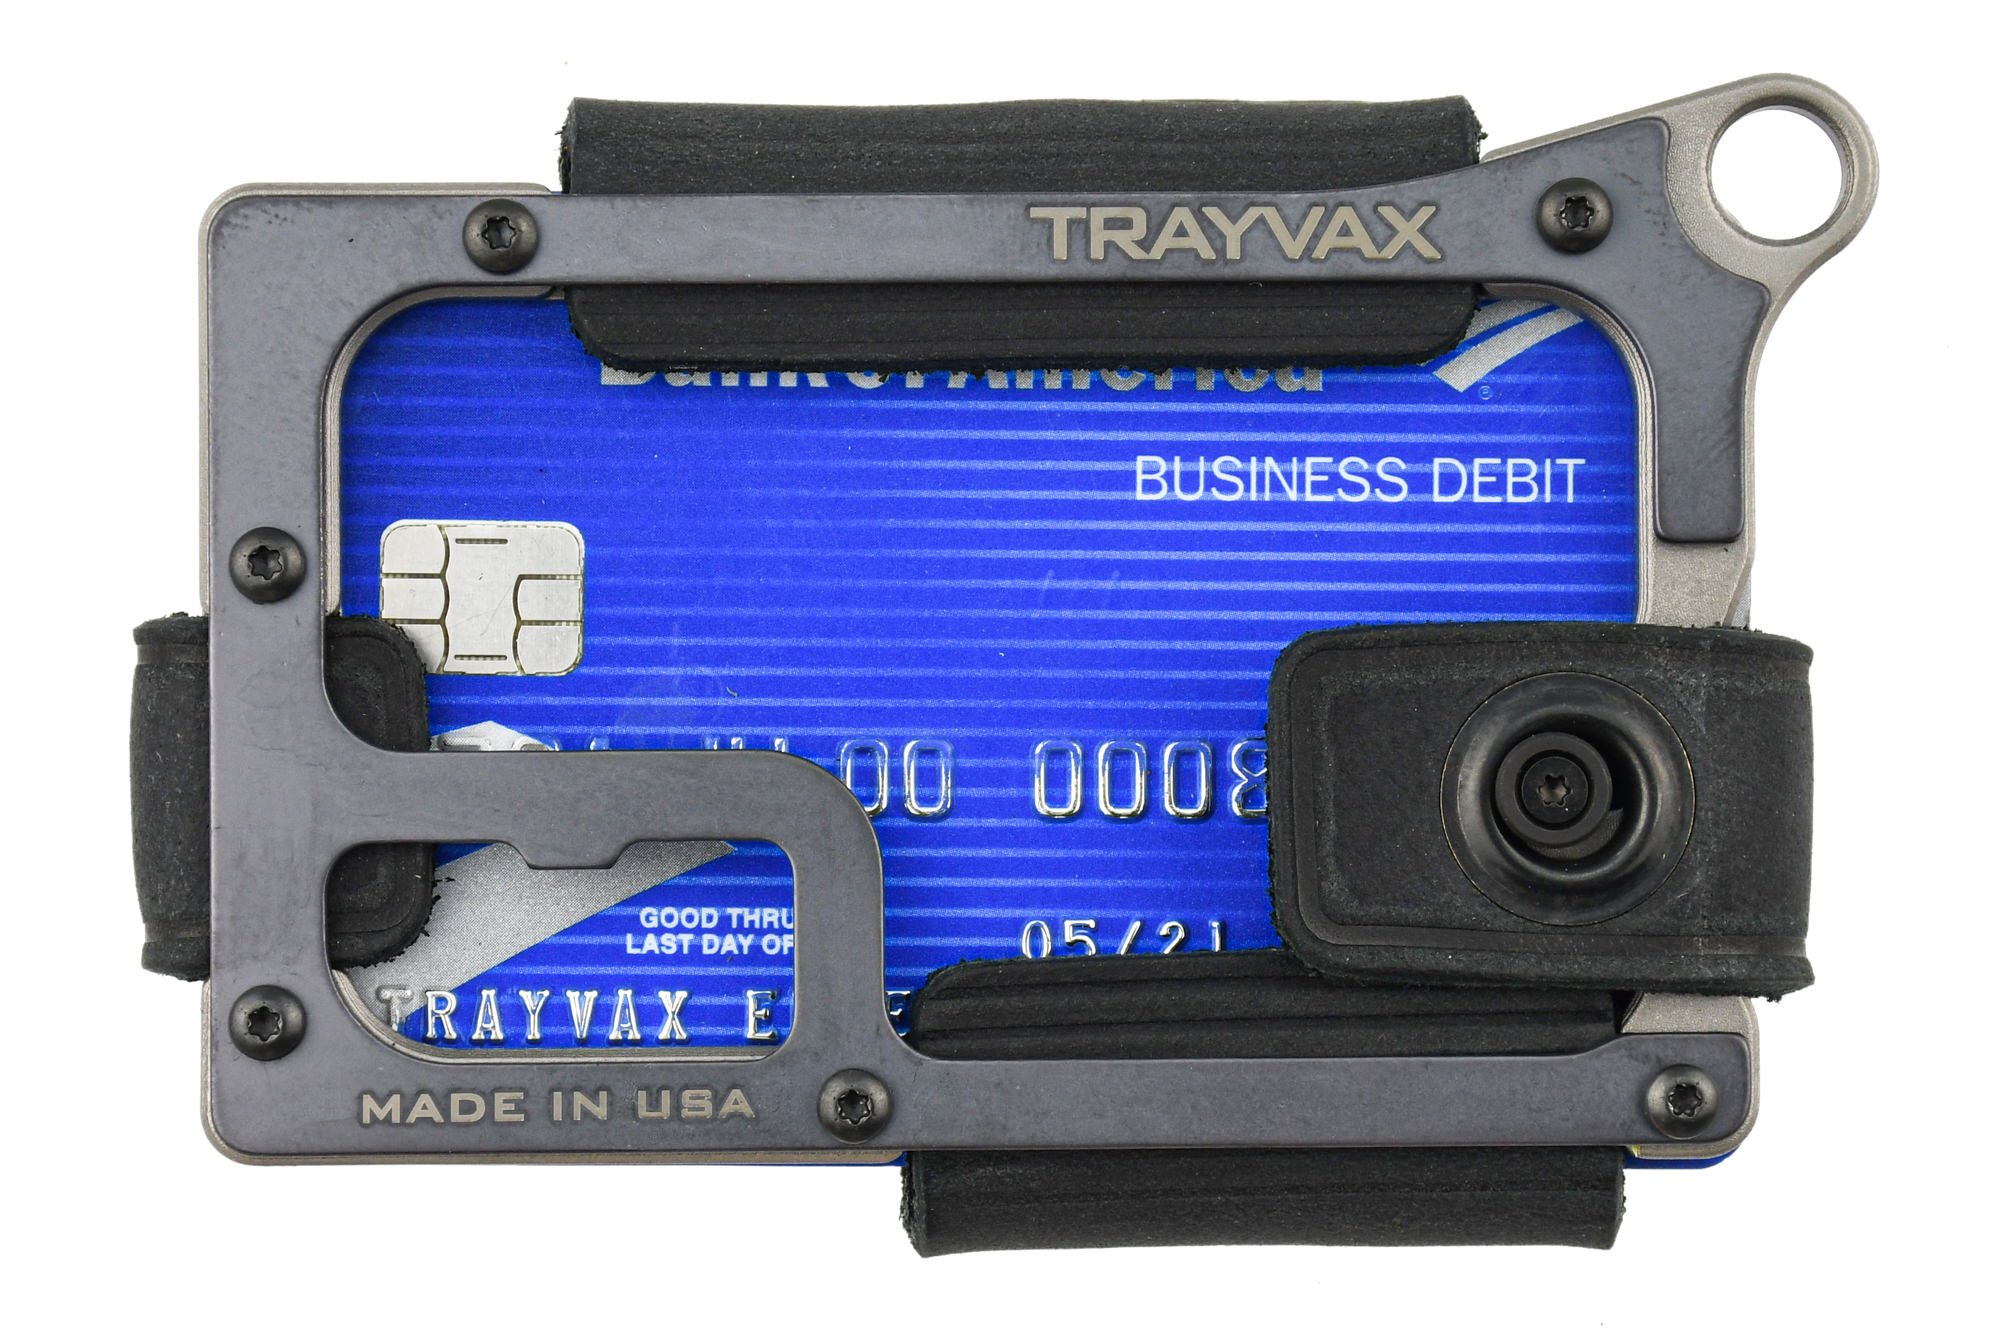 Trayvax Contour Wallet Titanium Stealth Black